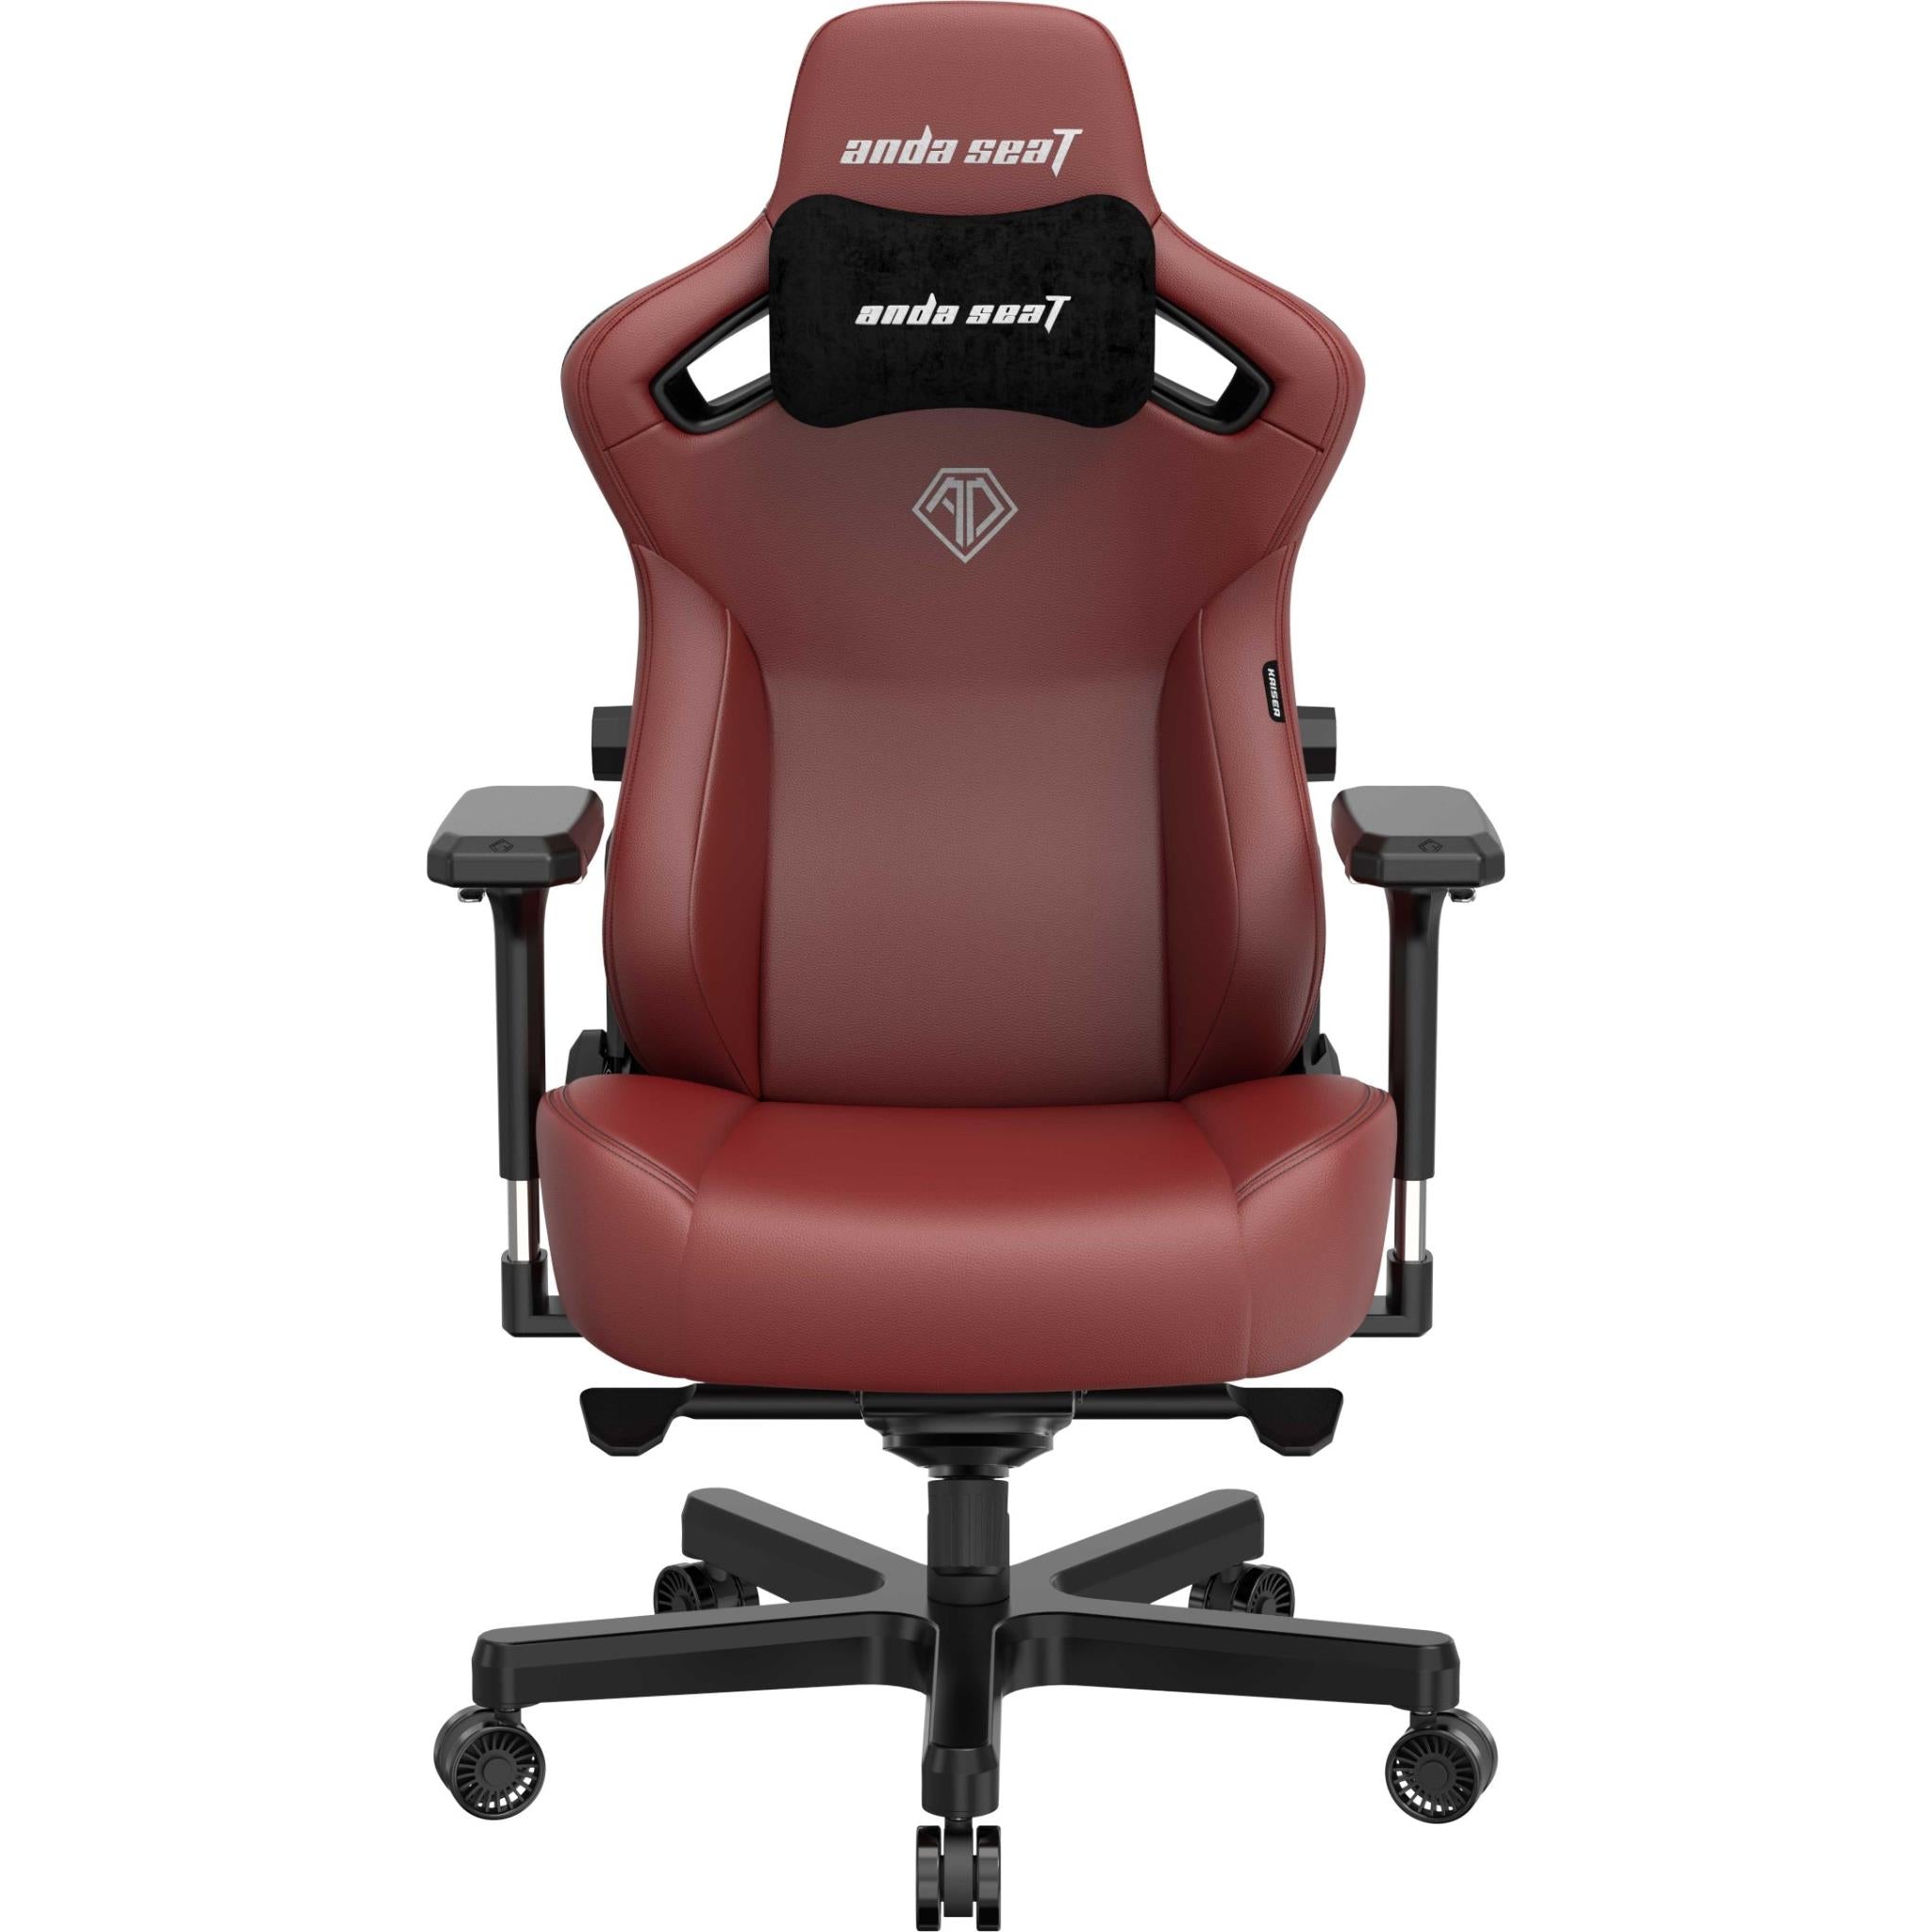 anda seat kaiser 3 series premium gaming chair maroon (large)